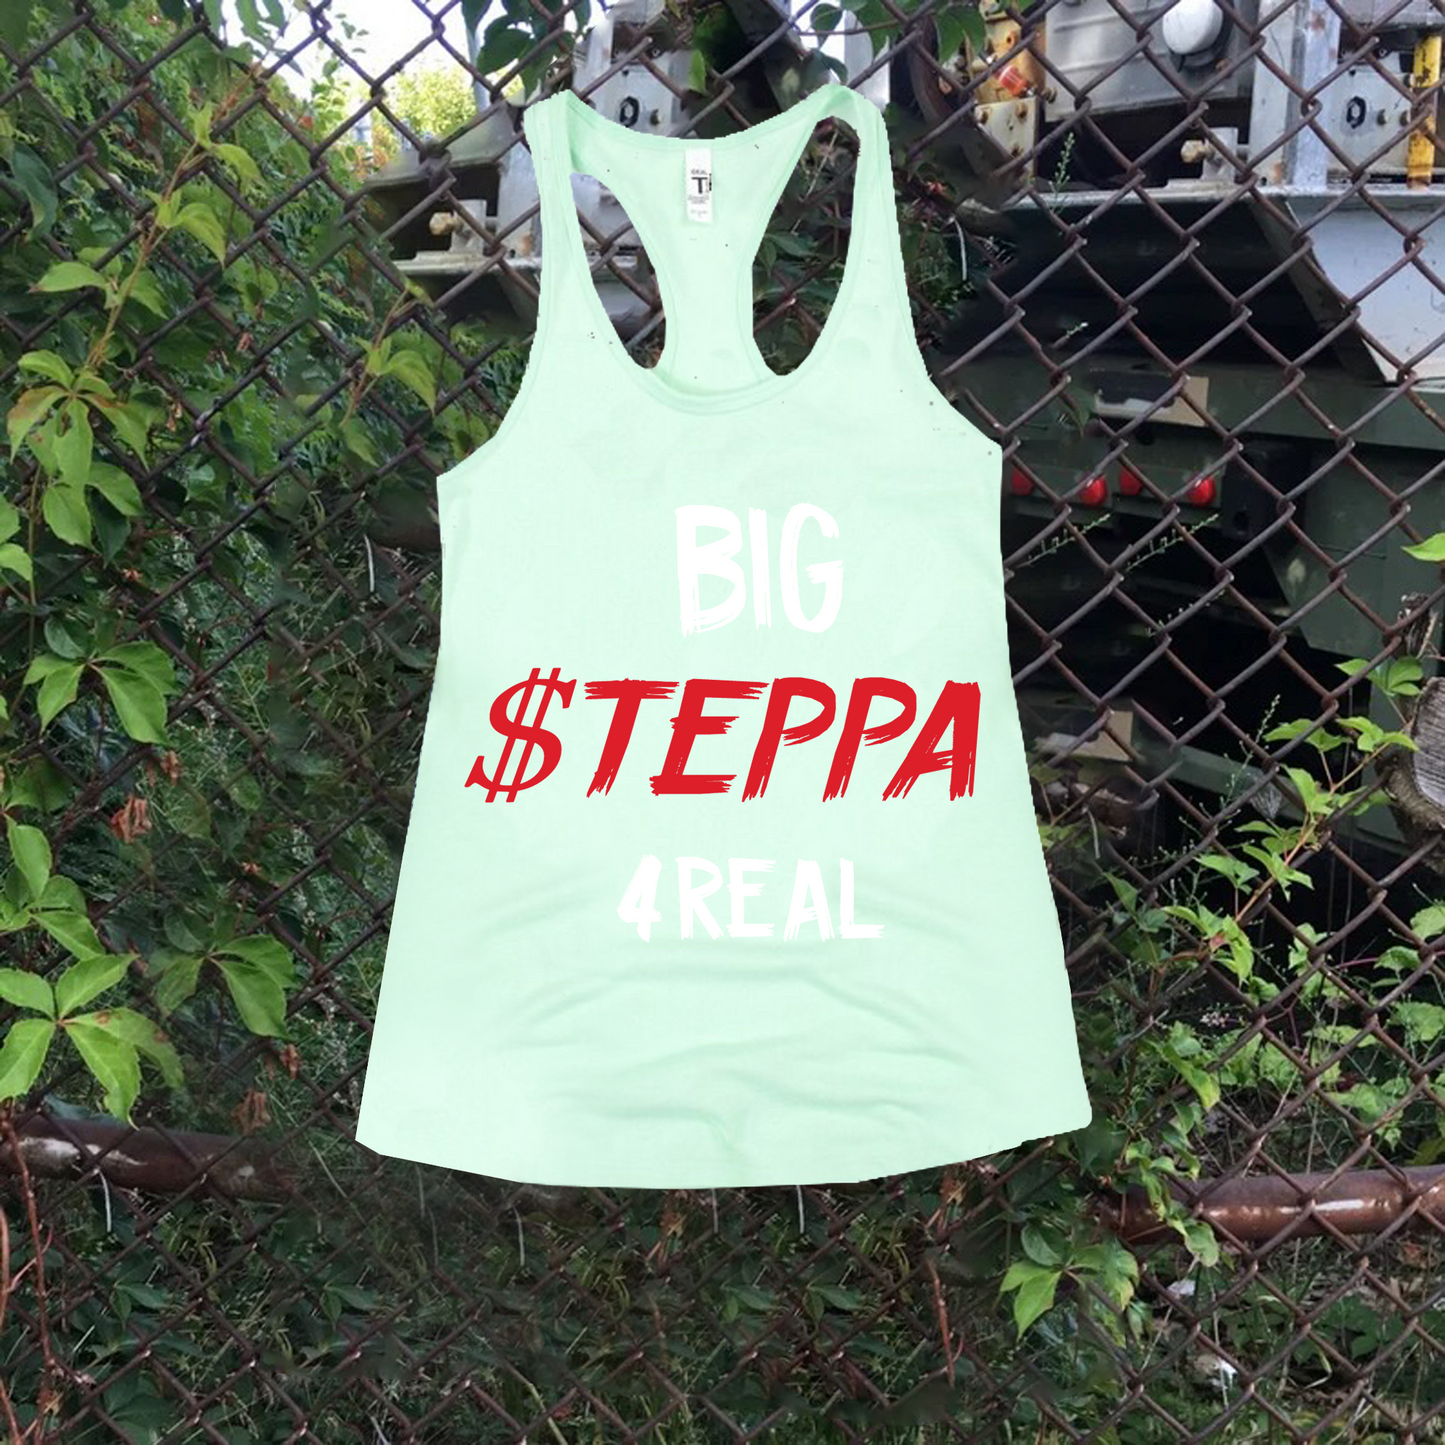 Big $teppa 4real Tank